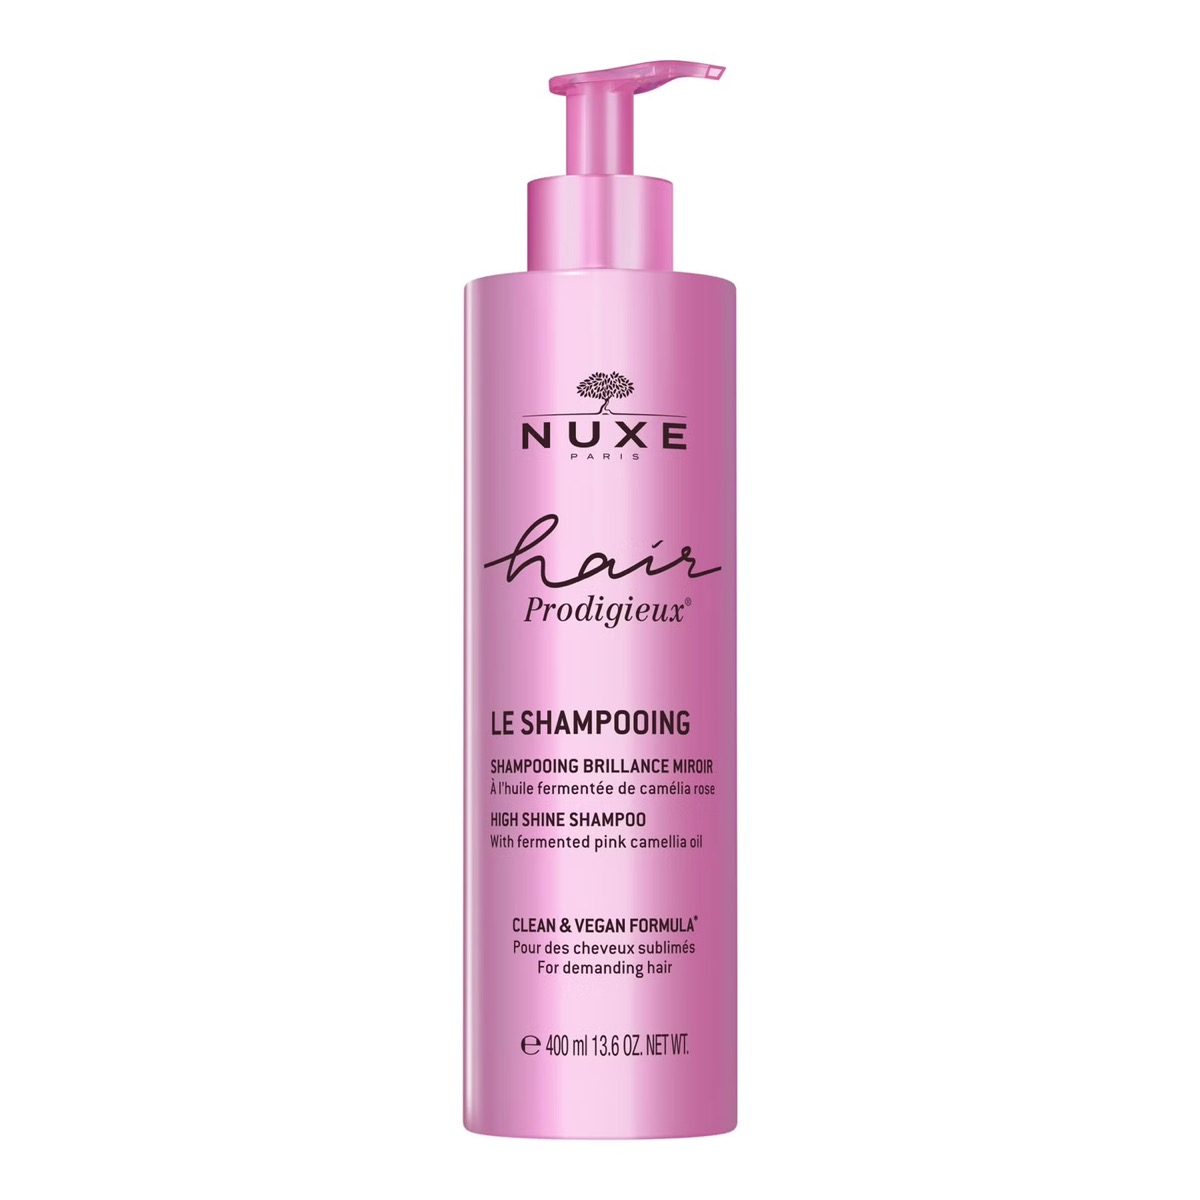 Shampoo Nuxe maxi formato